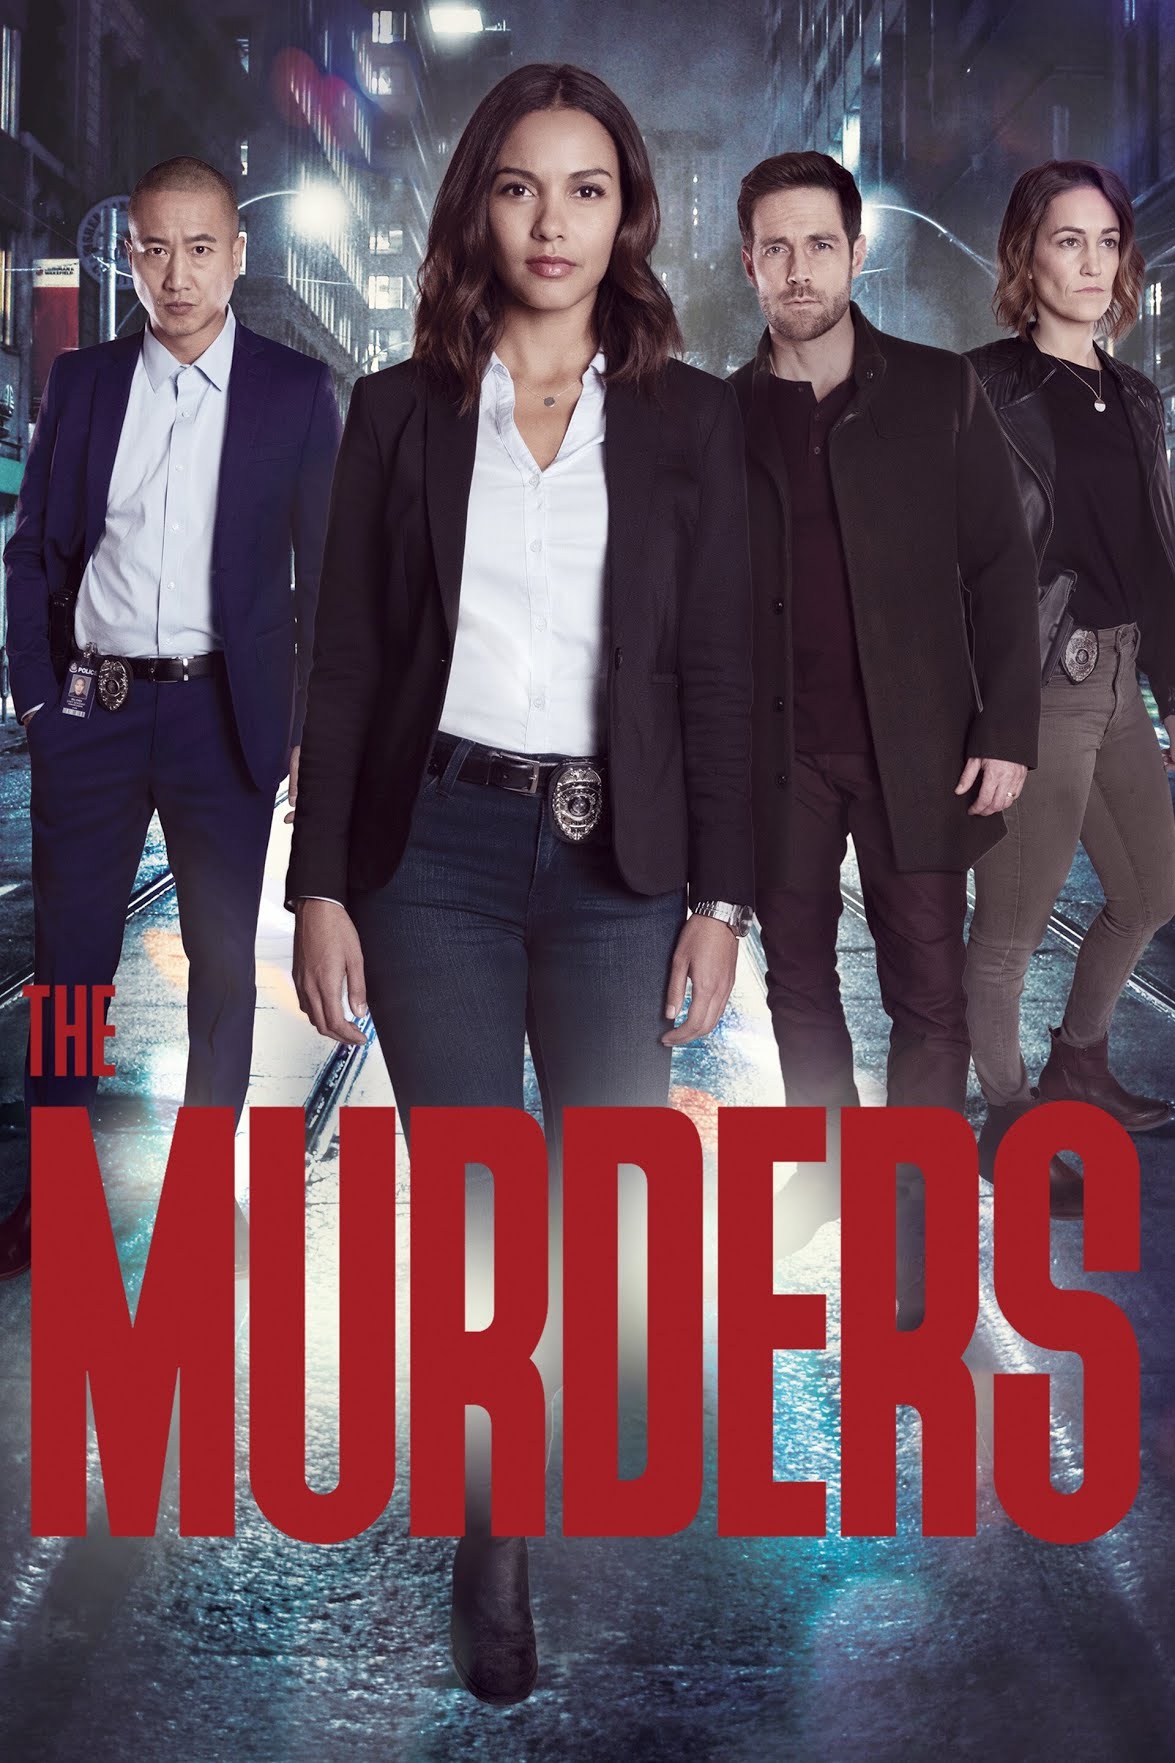 The Murders